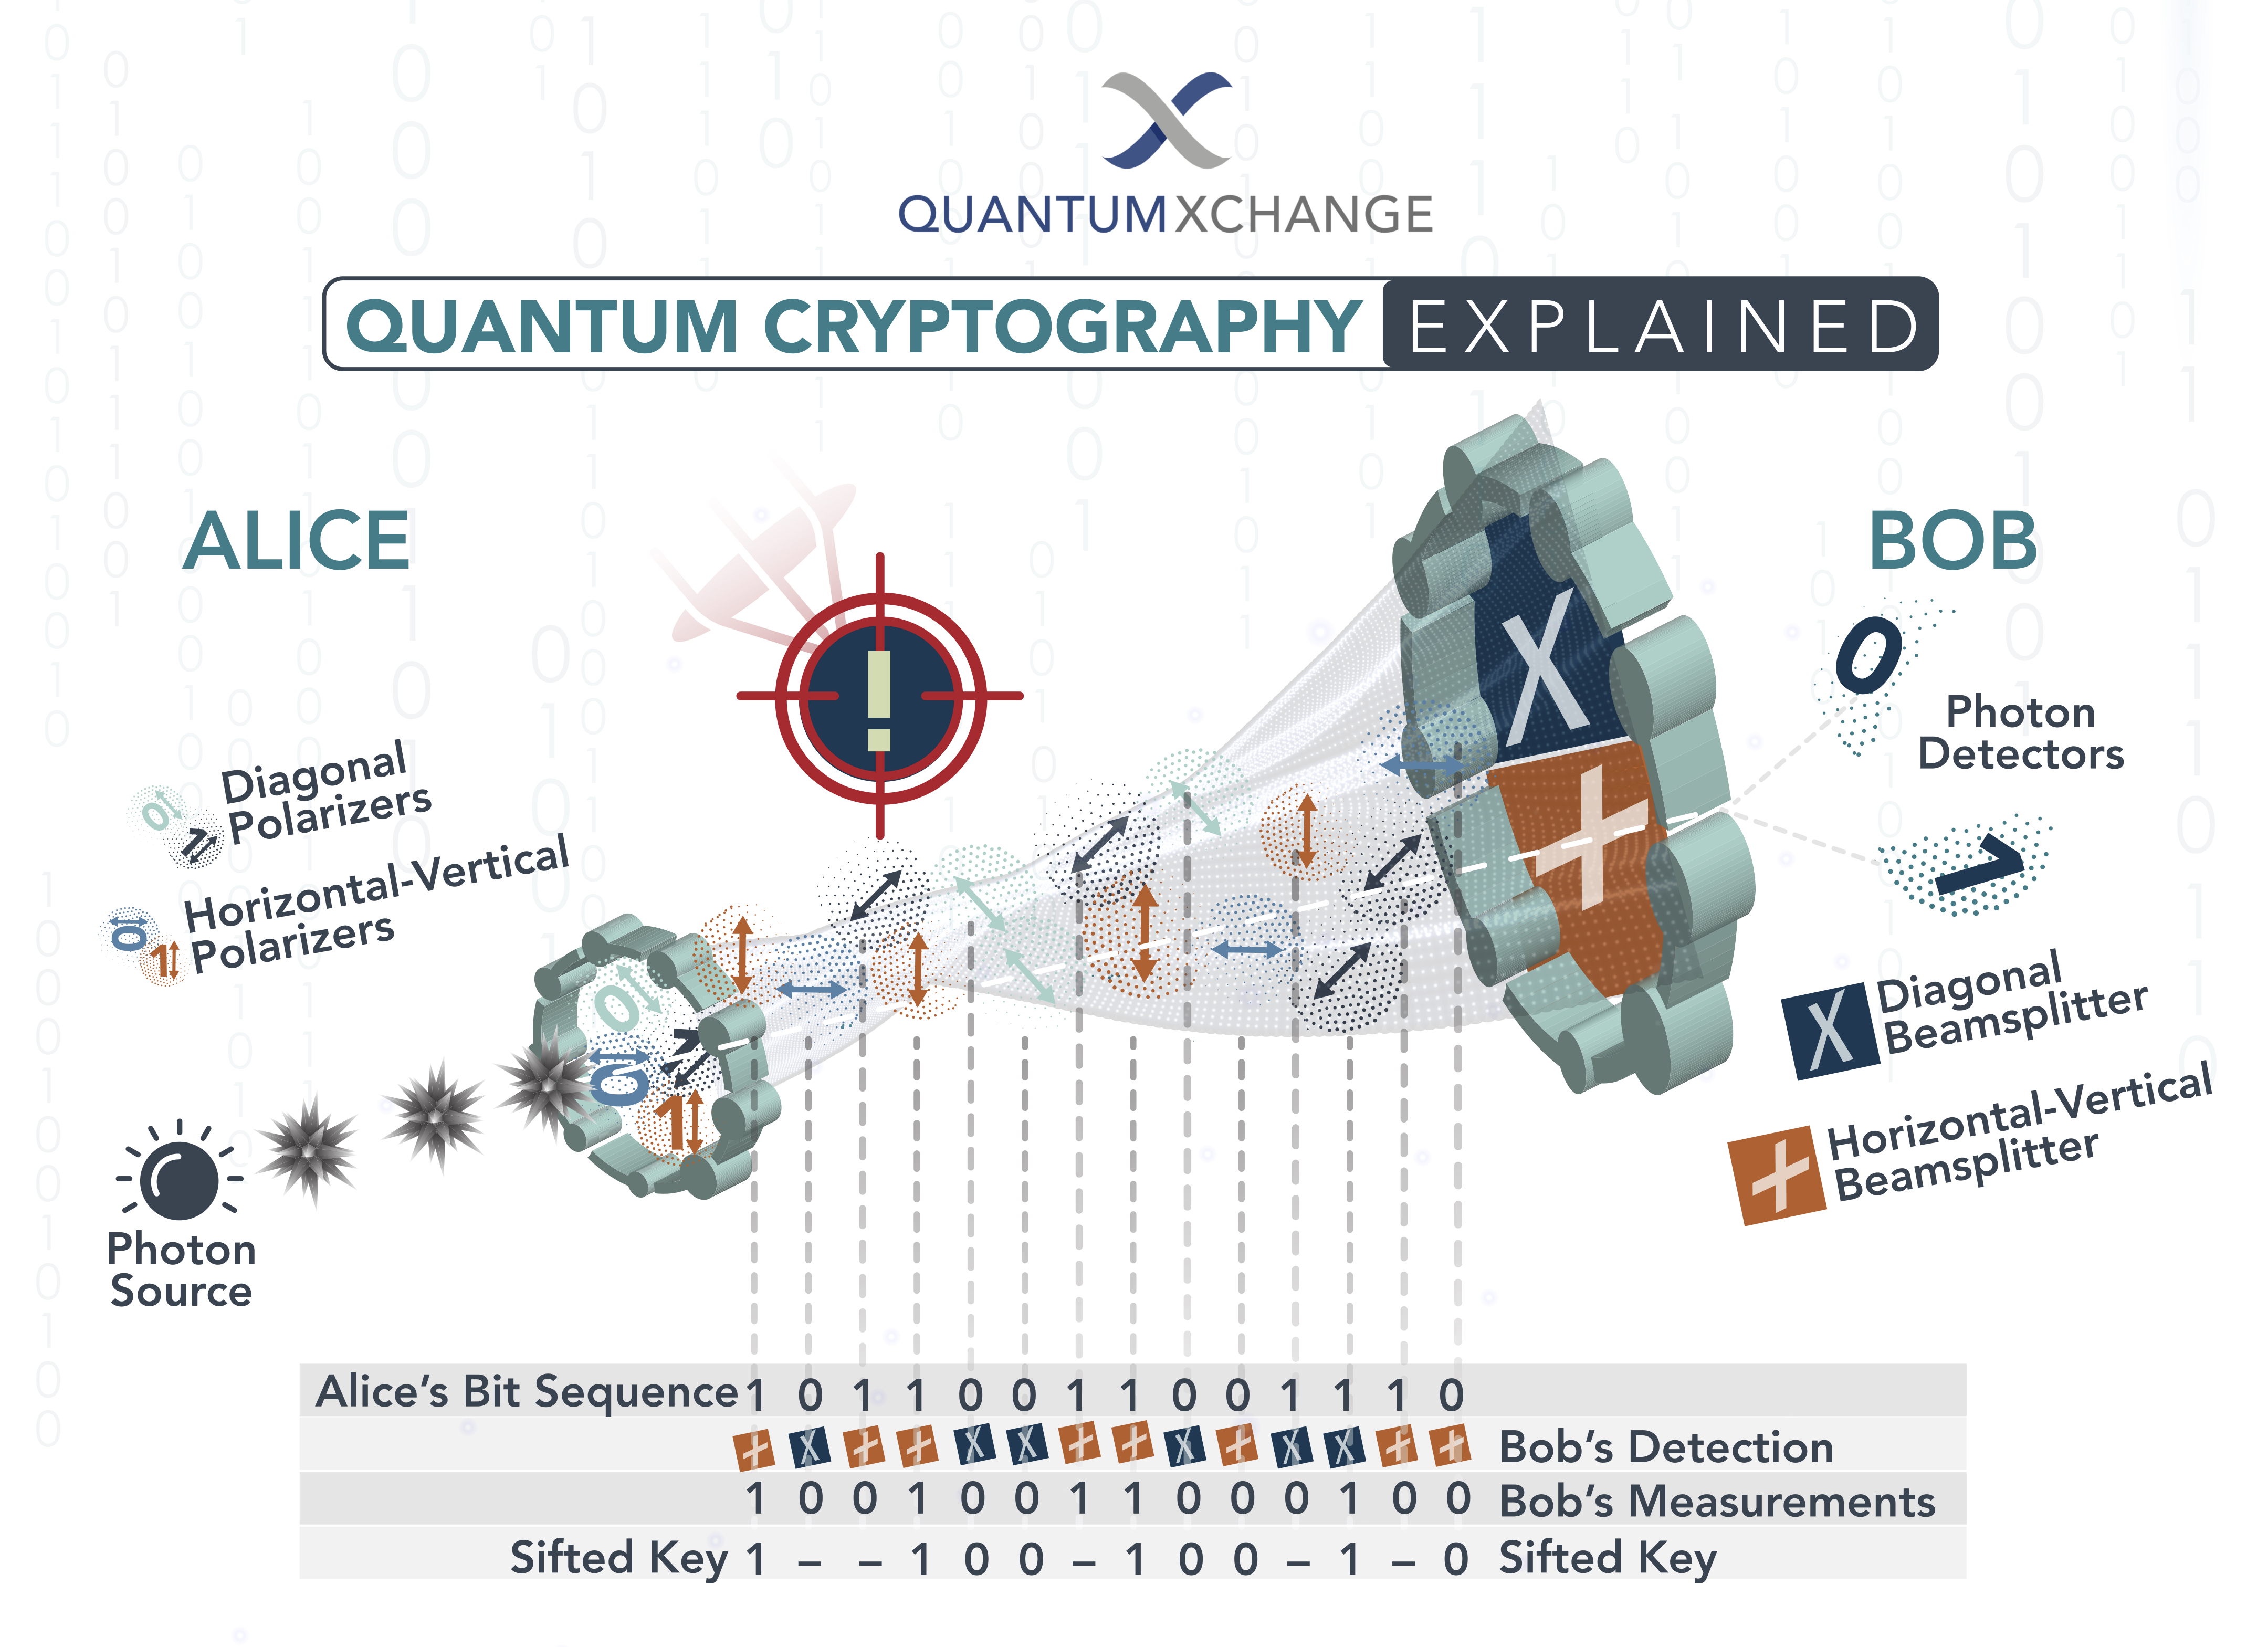 BSI - Quantum Technologies and Quantum-Safe Cryptography